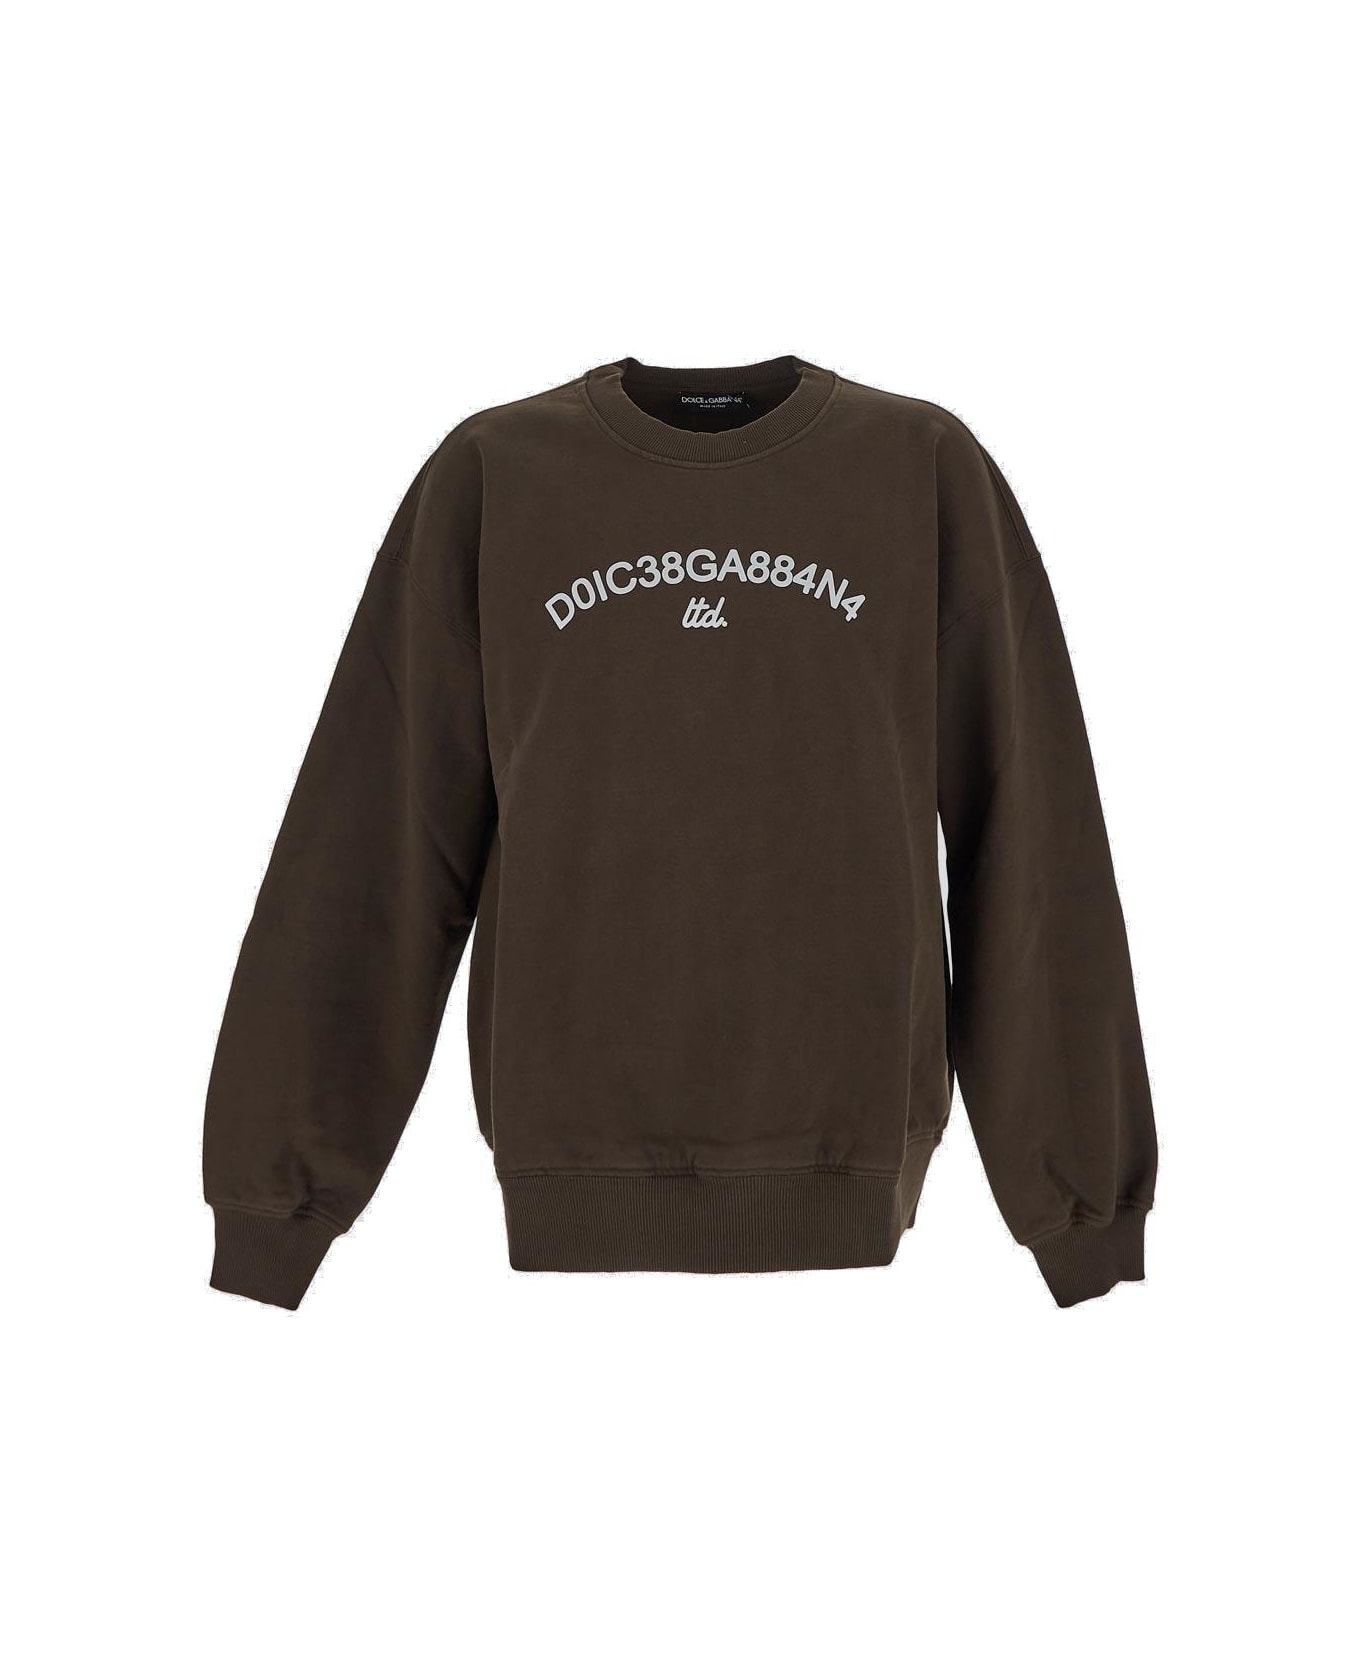 Dolce & Gabbana Logo Printed Crewneck Sweatshirt - BROWN